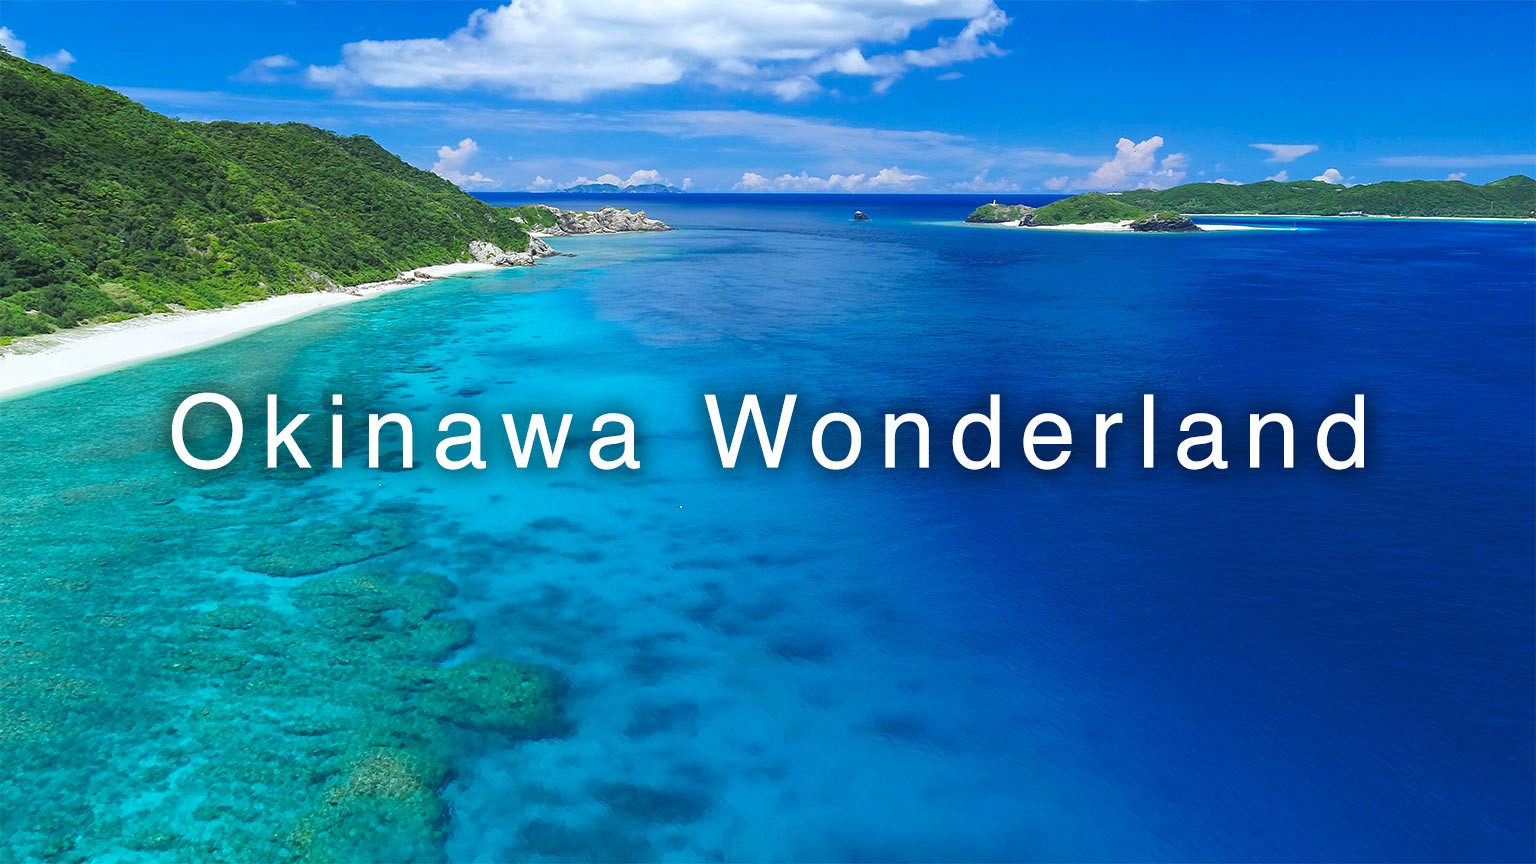 Okinawa Wonderland